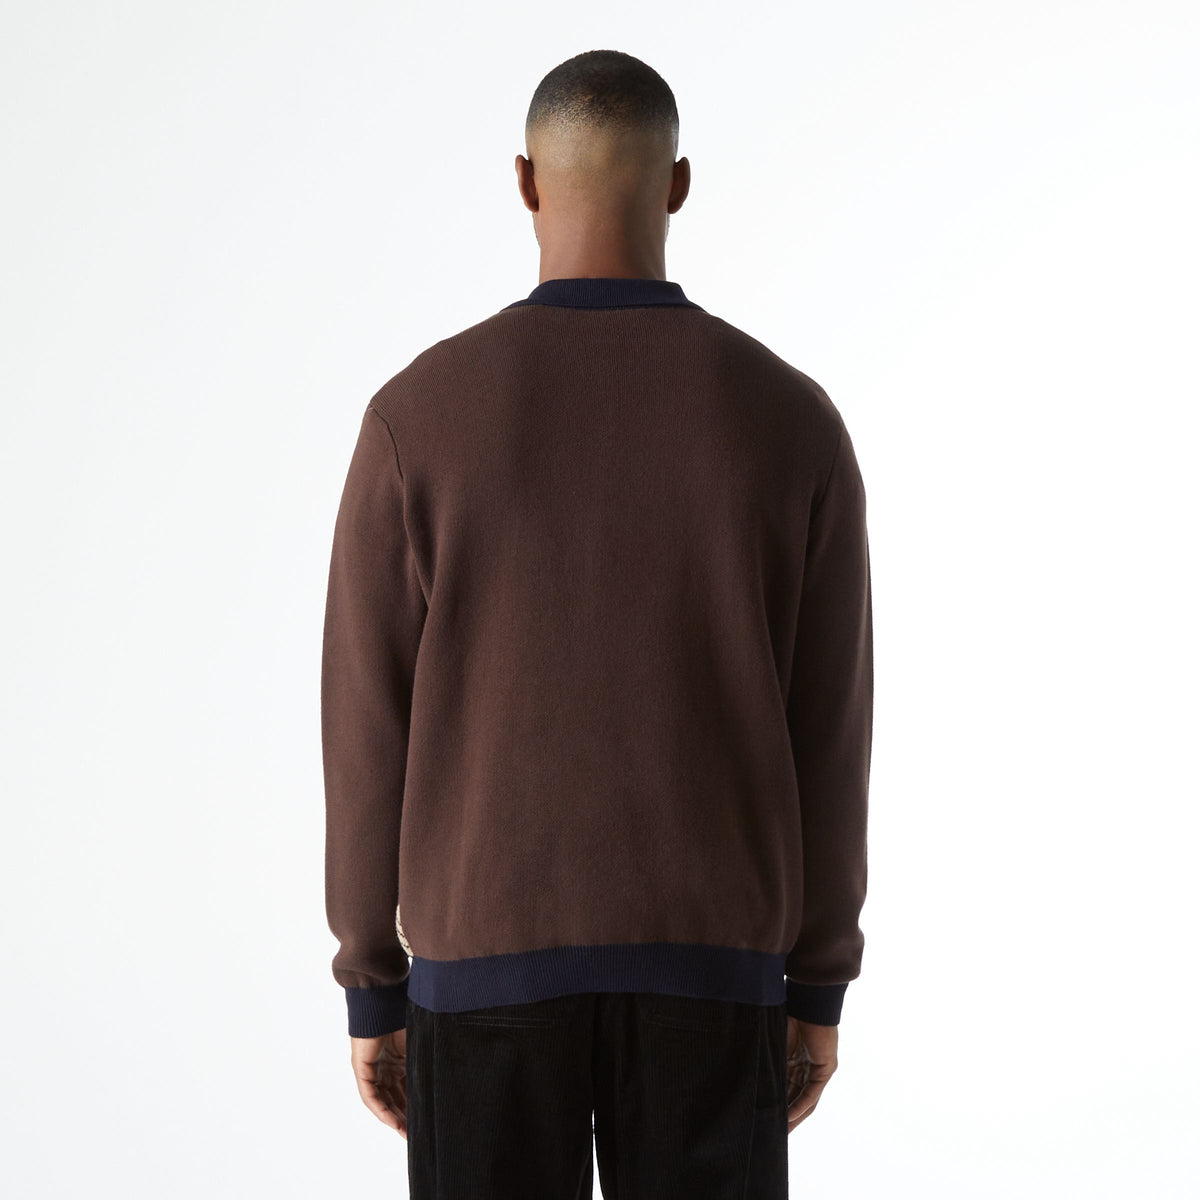 Dimensions Zip Sweater